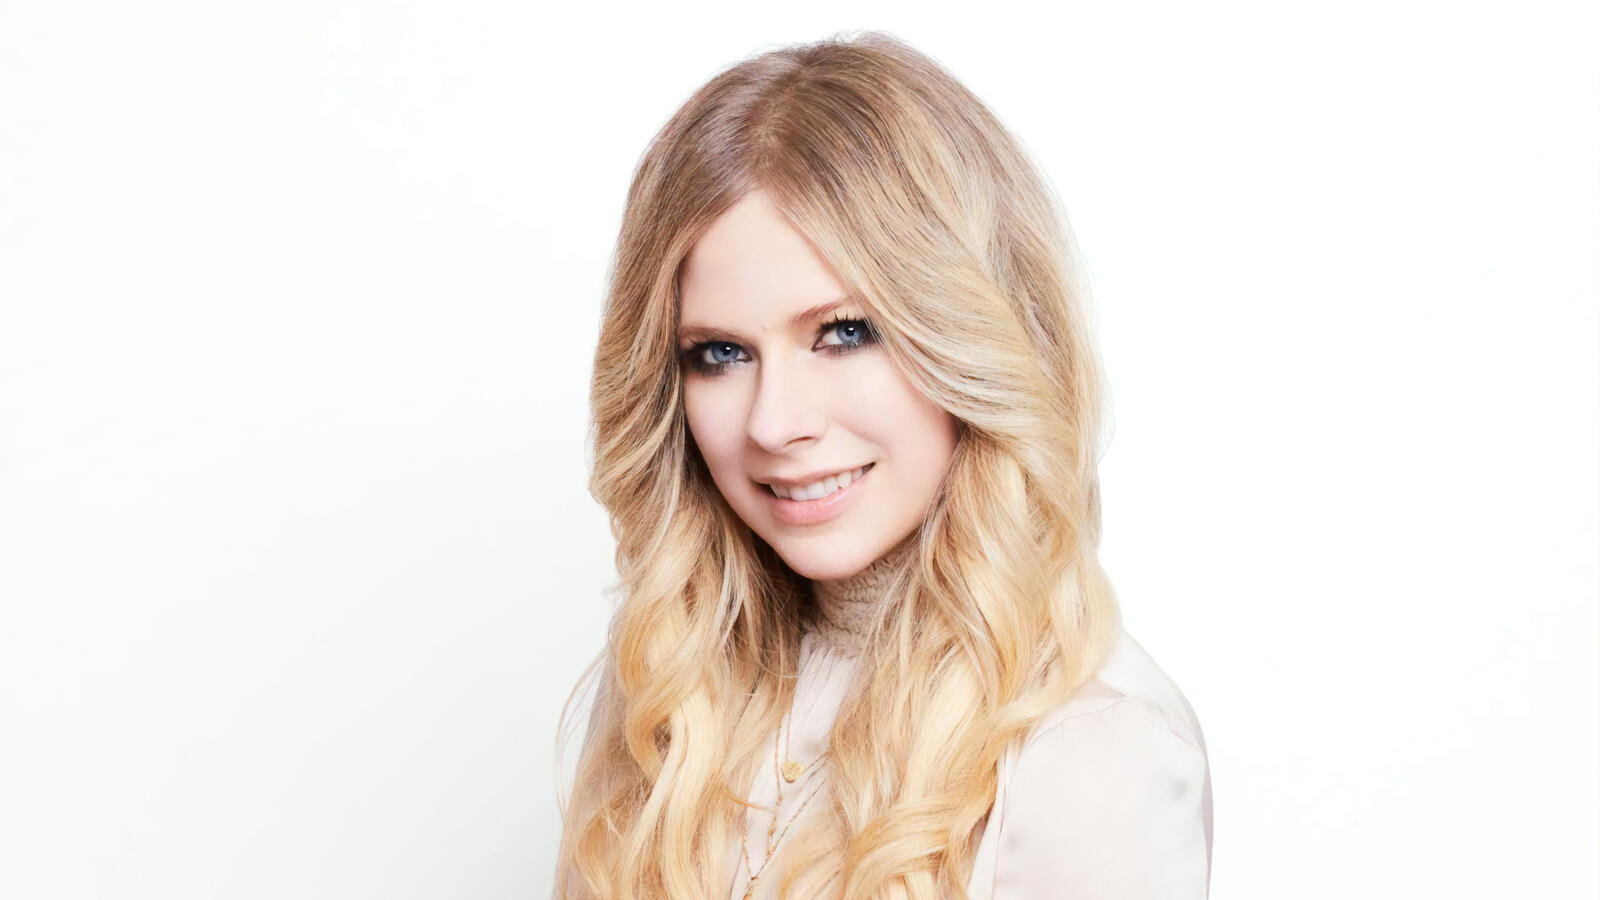 Wallpapers music Avril Lavigne blonde on the desktop